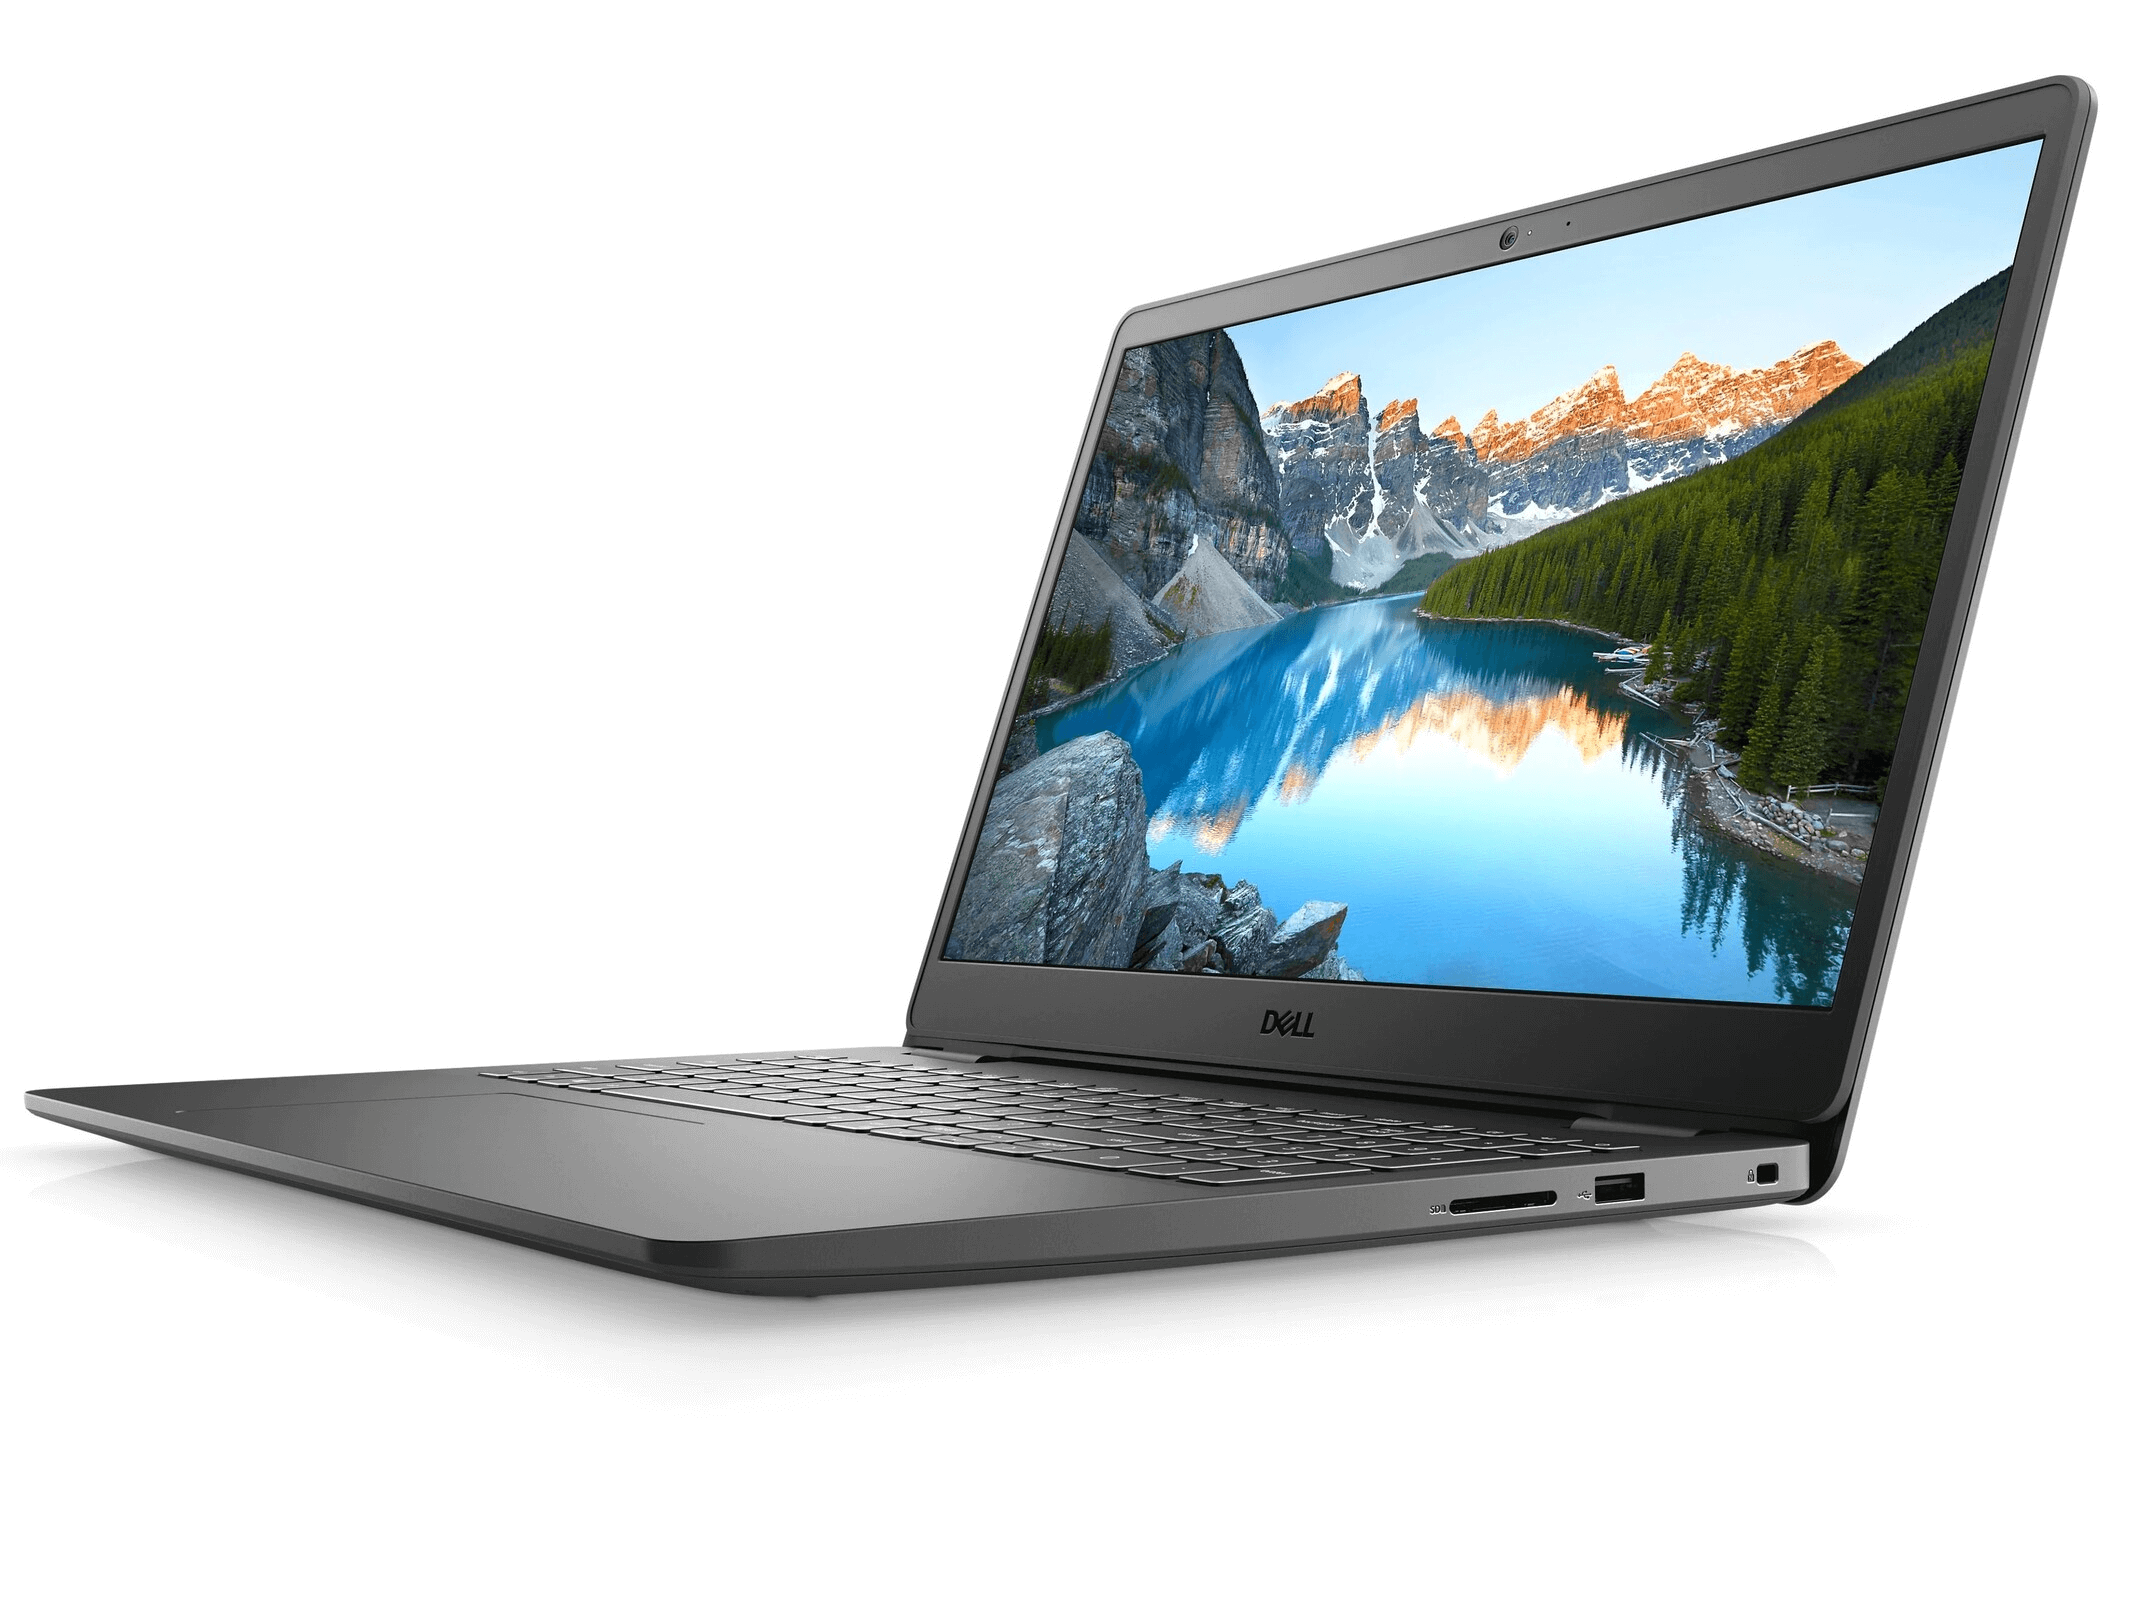 Thiết ké máy laptop Dell inspiron 3501